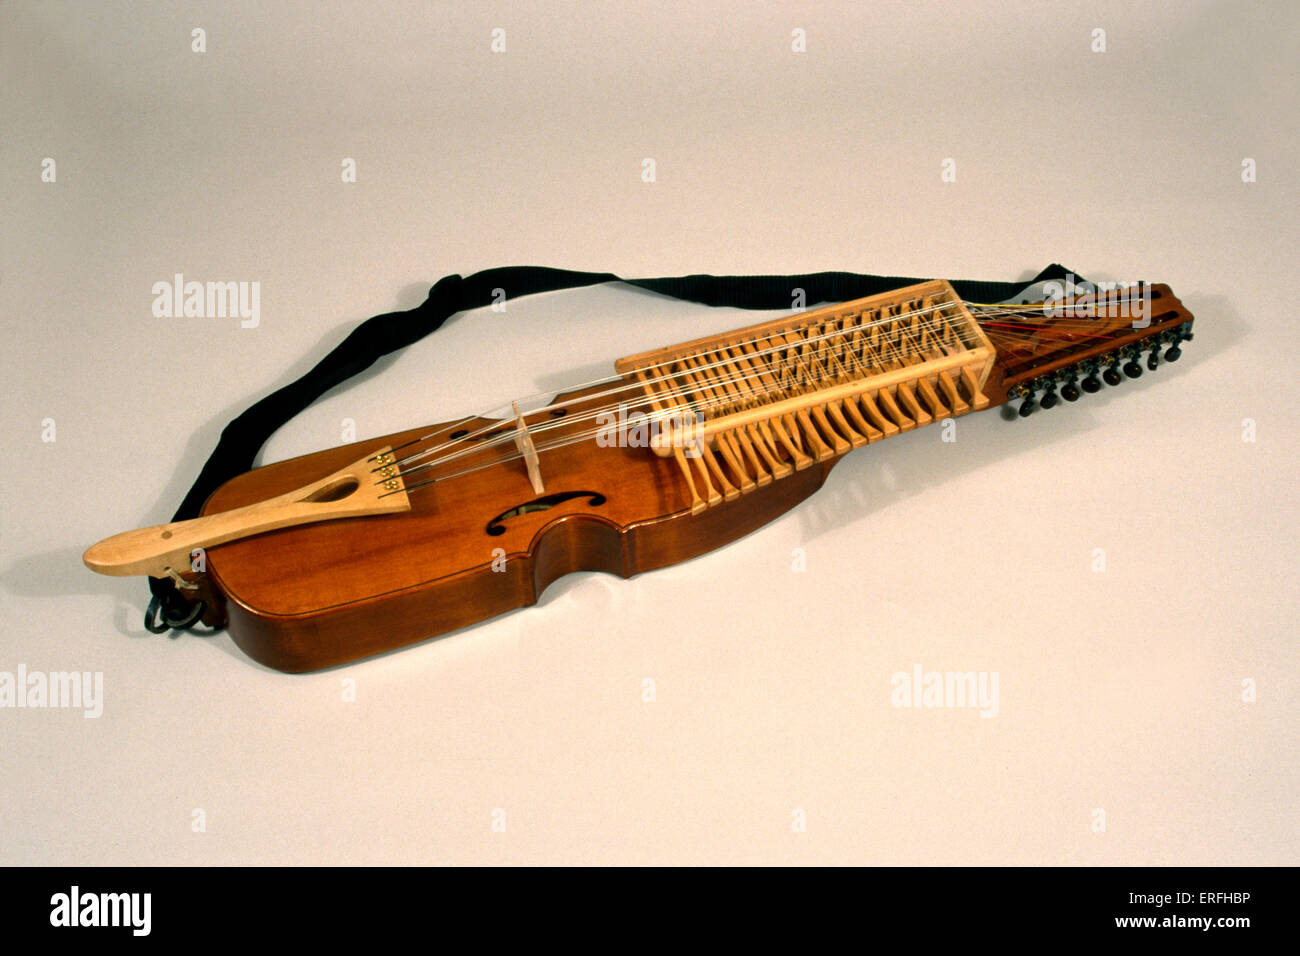 Nyckelharpa - norvegese strumento a corda. Foto Stock